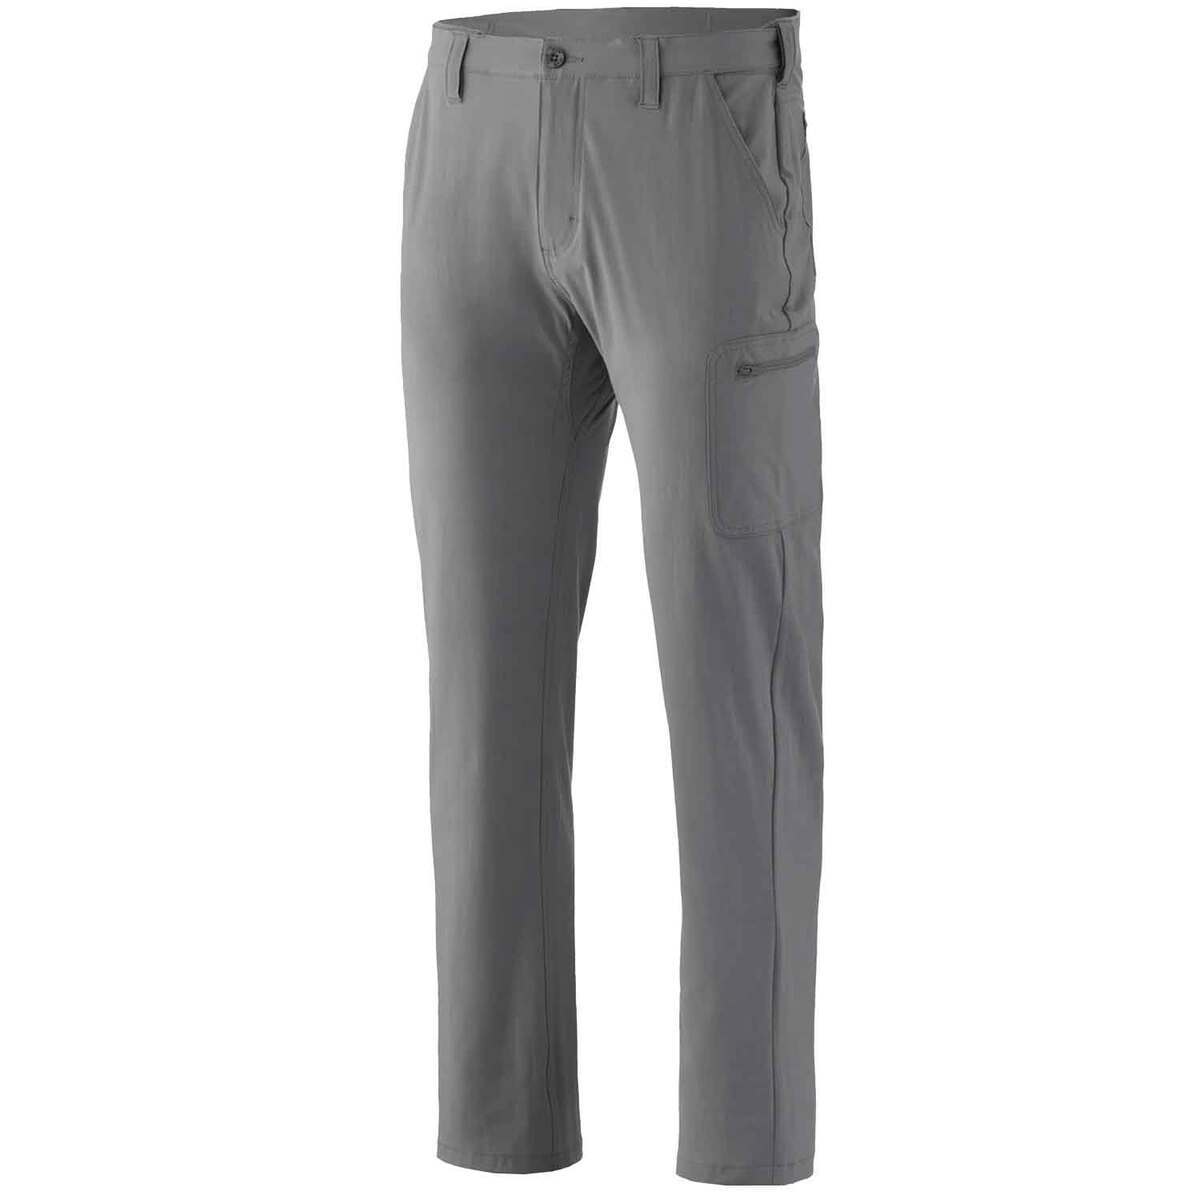 Huk Men's Next Level Fishing Pants - Overcast Grey - 3XL - Overcast Grey  3XL